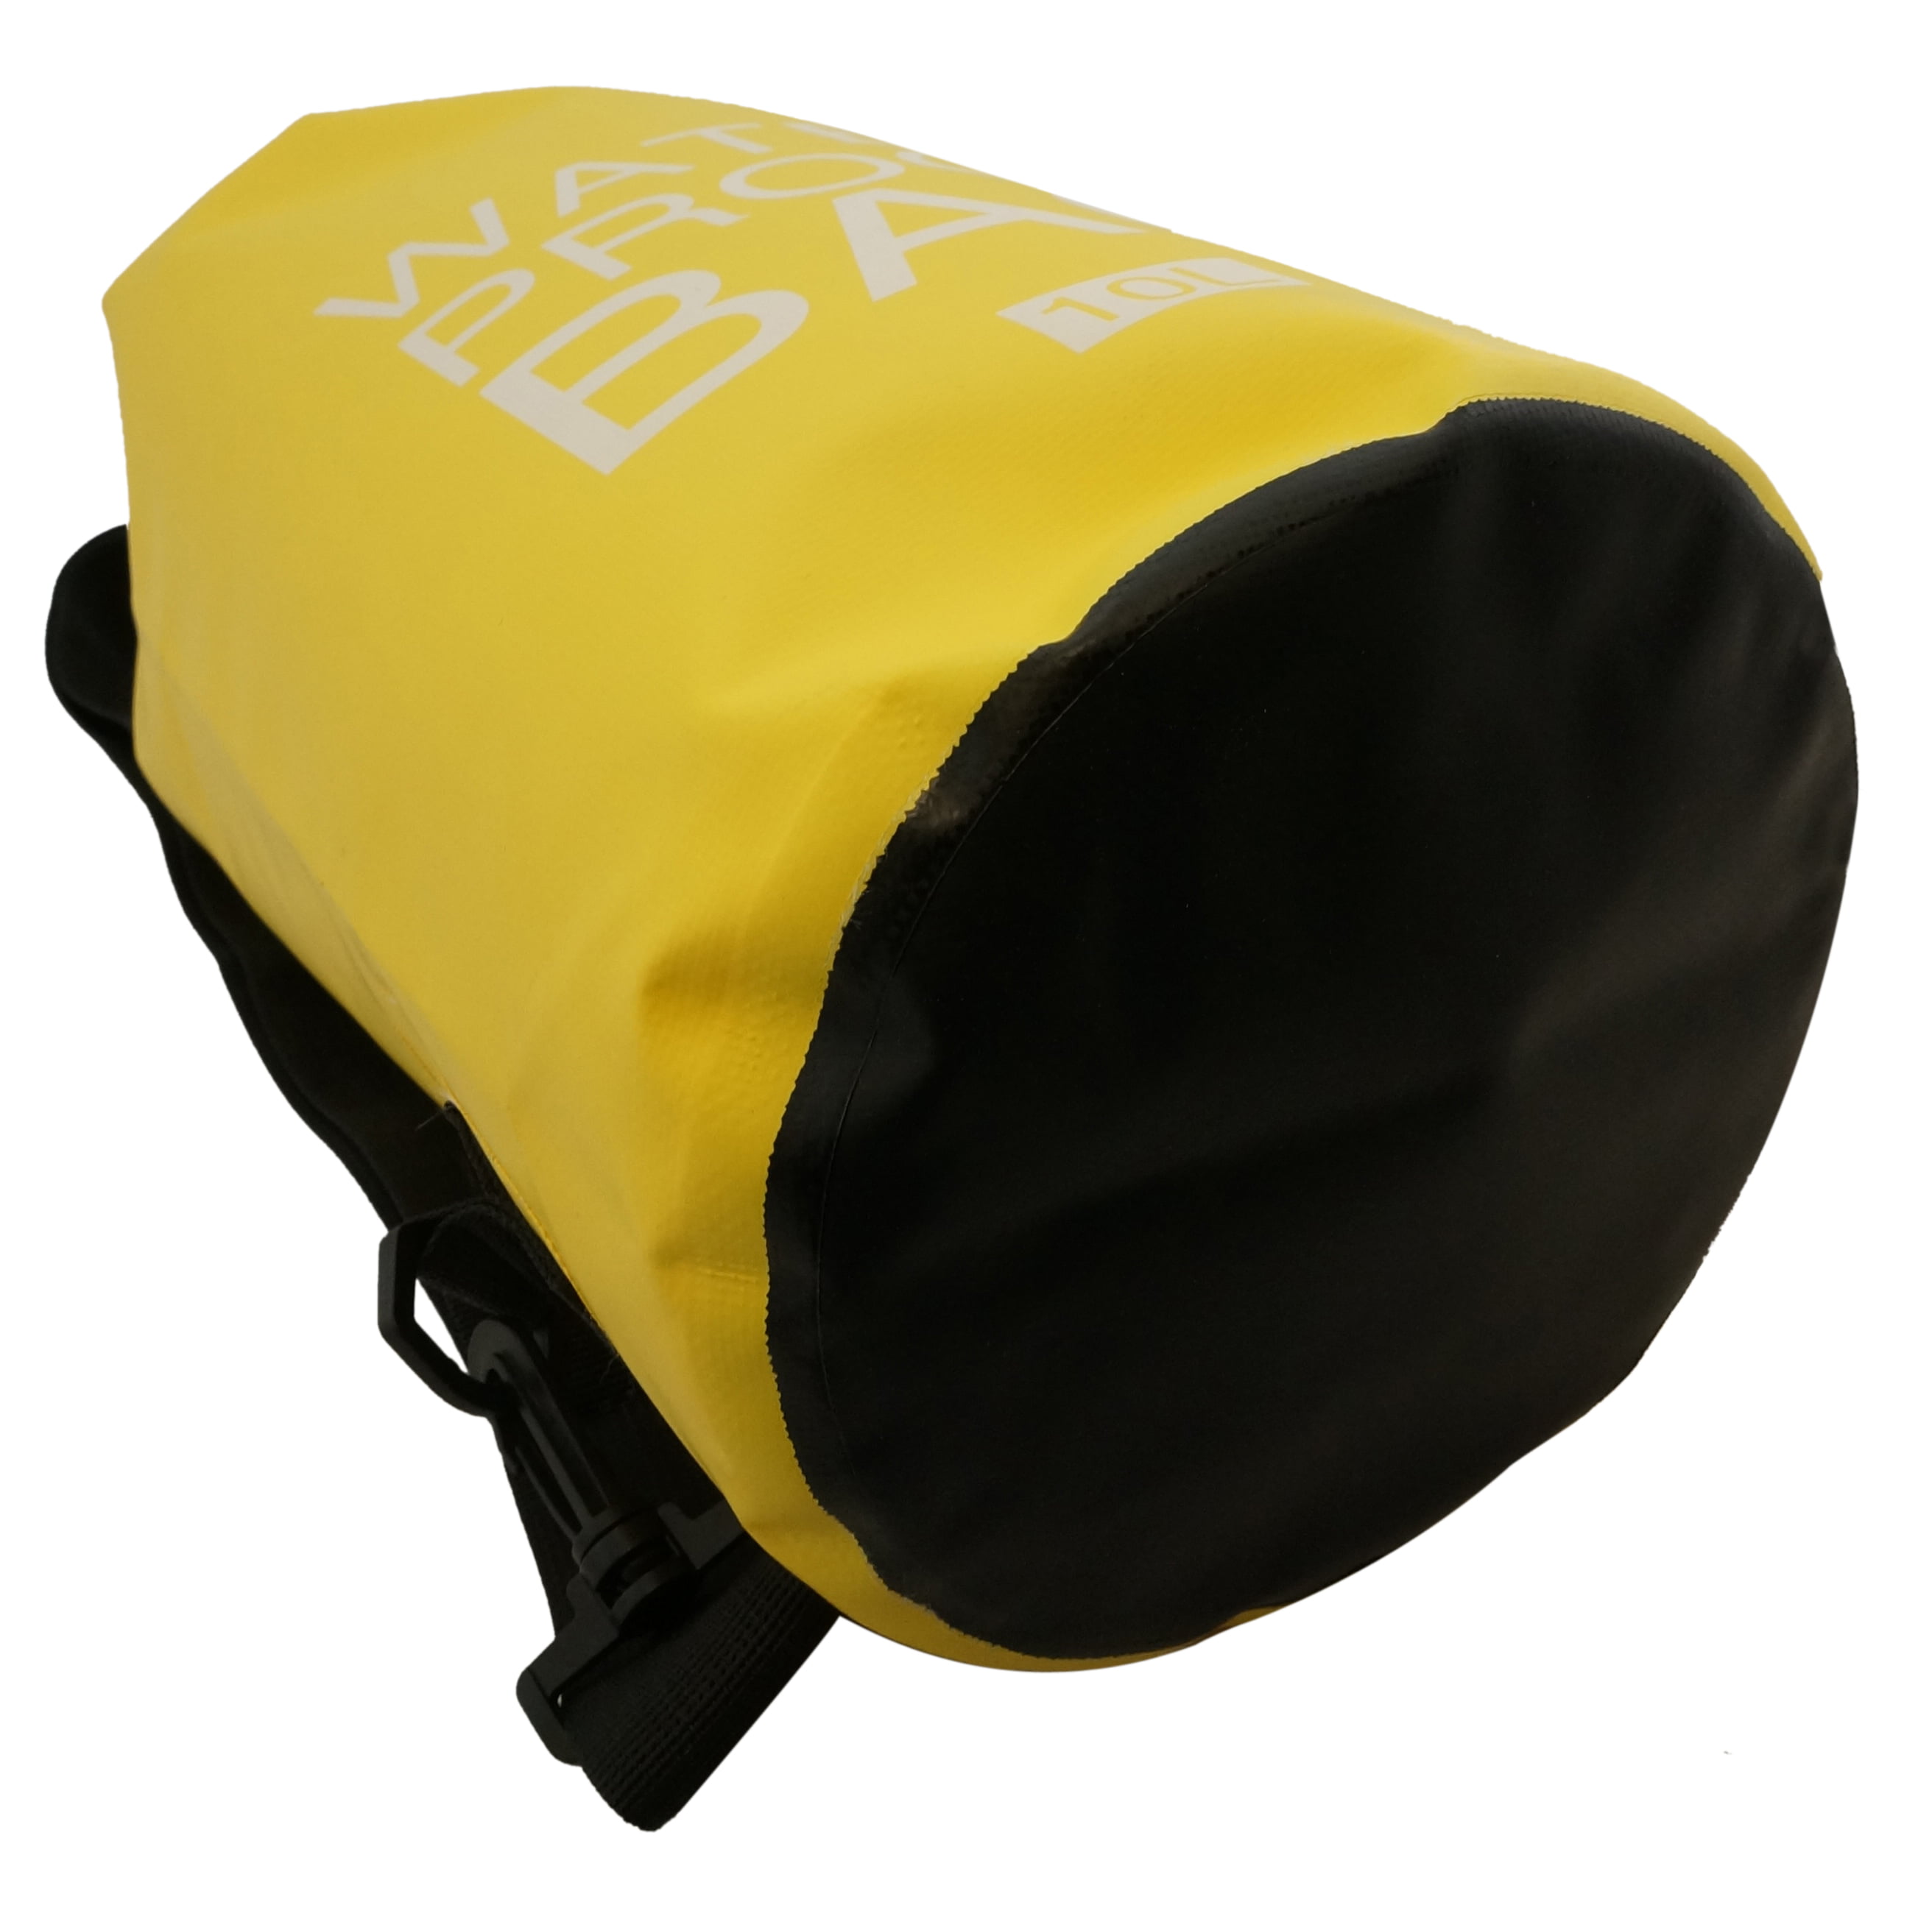 Waterproof Bag Premium Dry Sack Roll Top Floating Gear Bags for